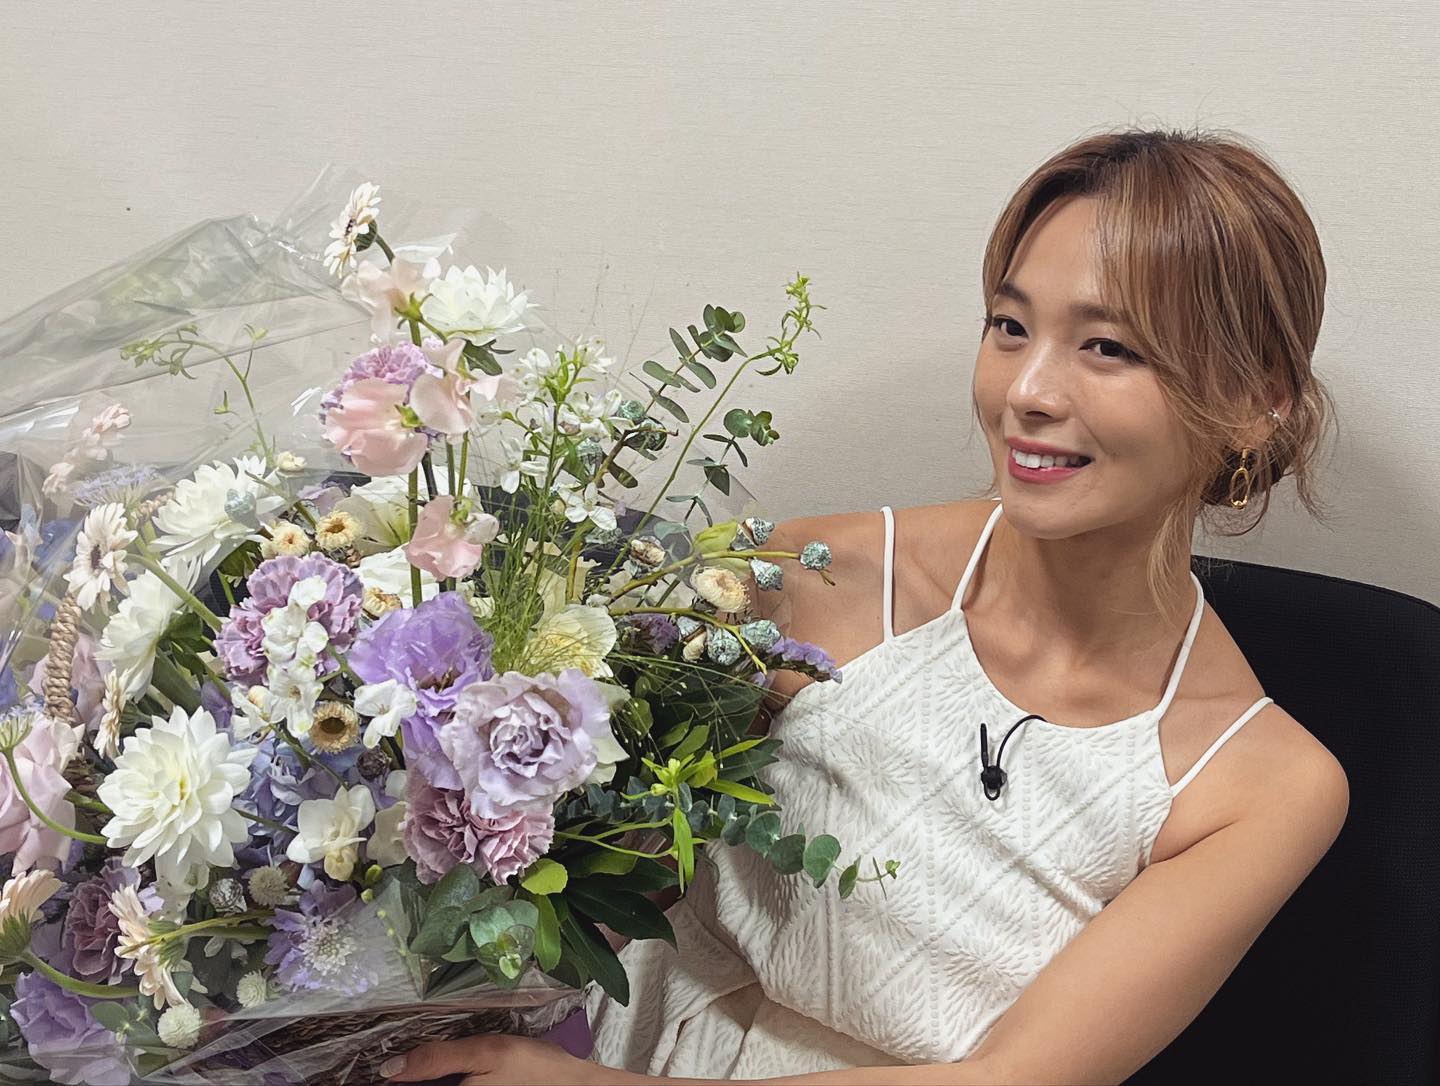 Sunye, Wonder Girls Member-turned-missionary, Announces Retirement